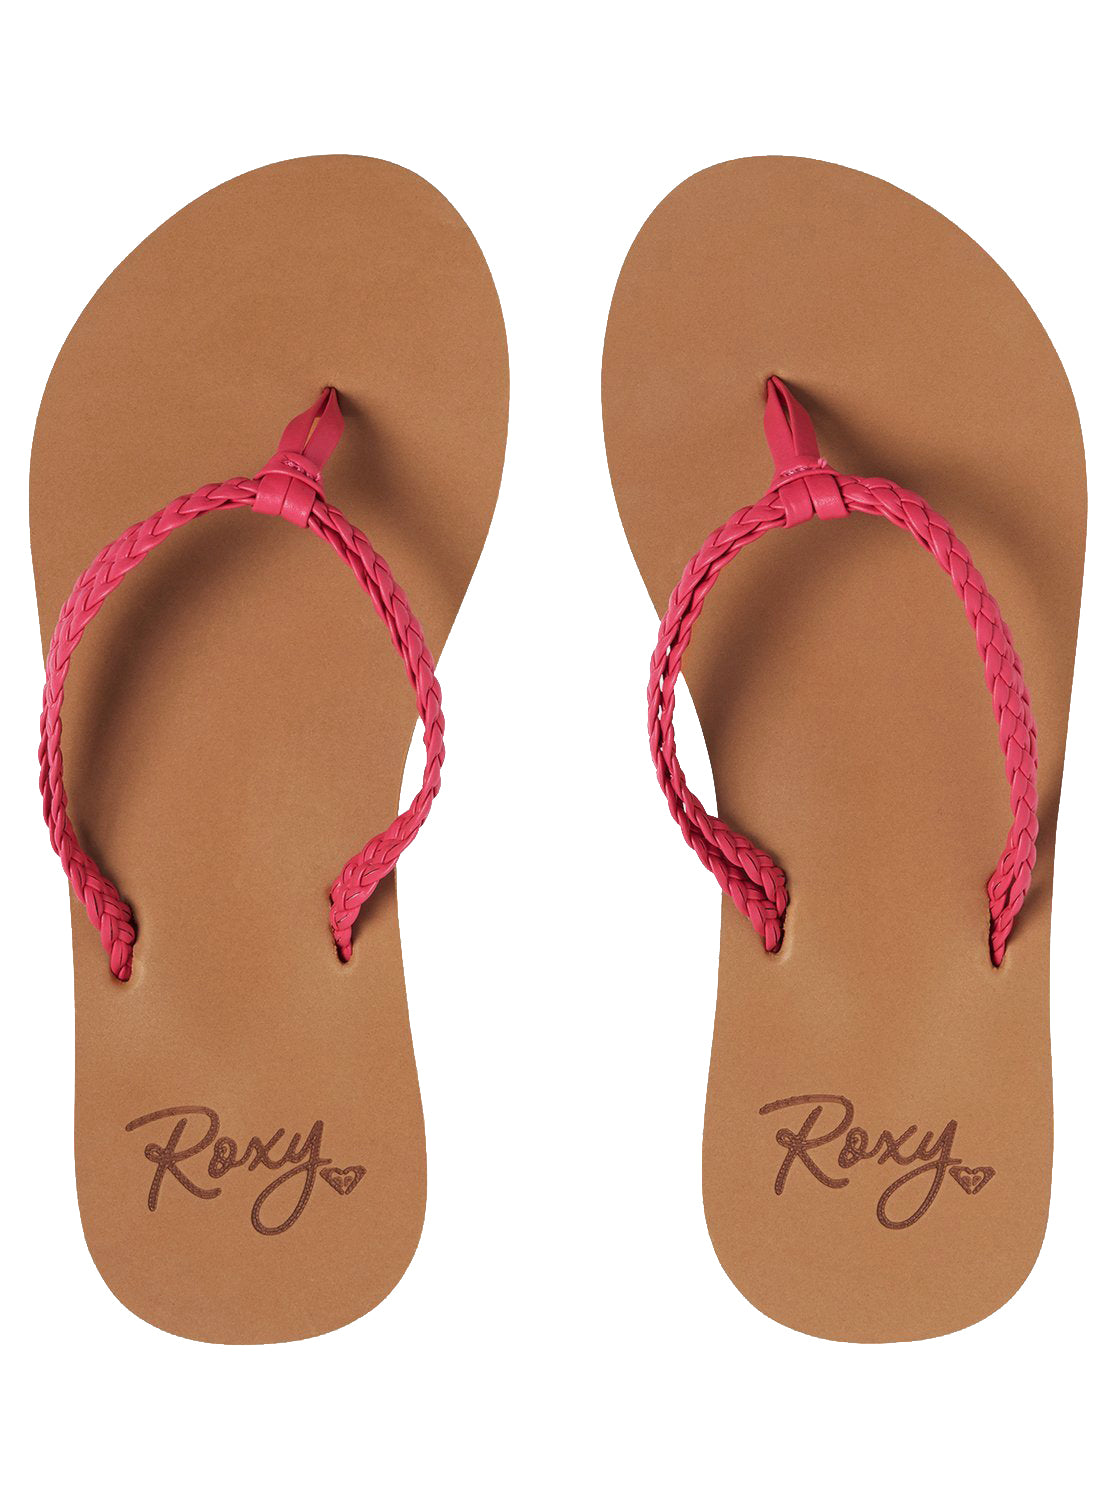 Roxy Costas 2 Girls Sandal RAS-Raspberry 11 C